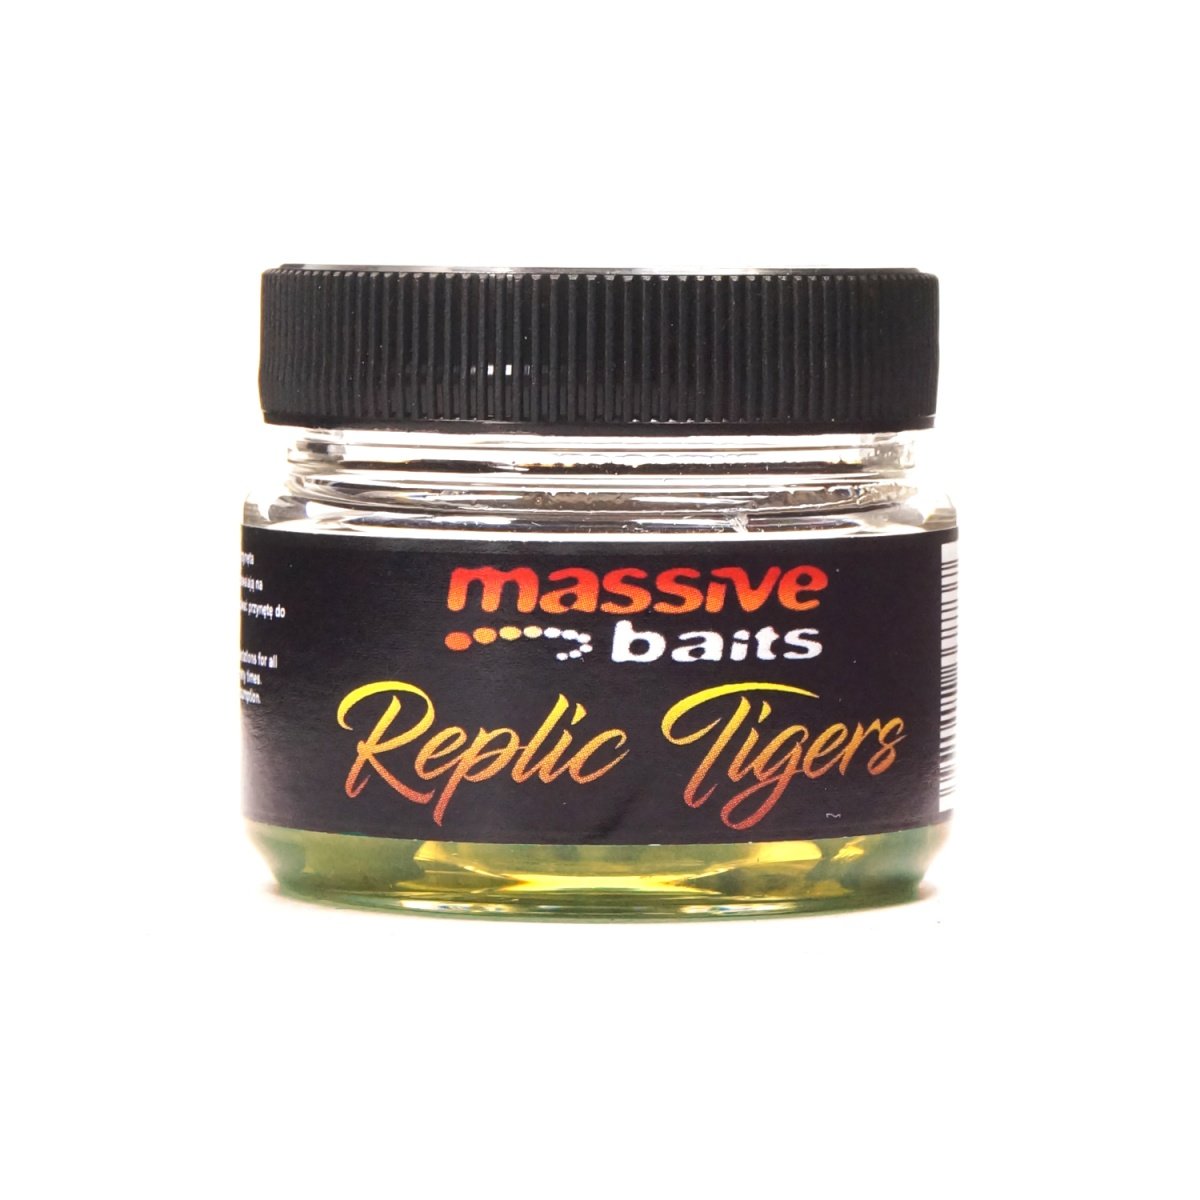 Massive Baits – Replic Tigers Green Mulberry Sztuczny Orzech Tygrysi